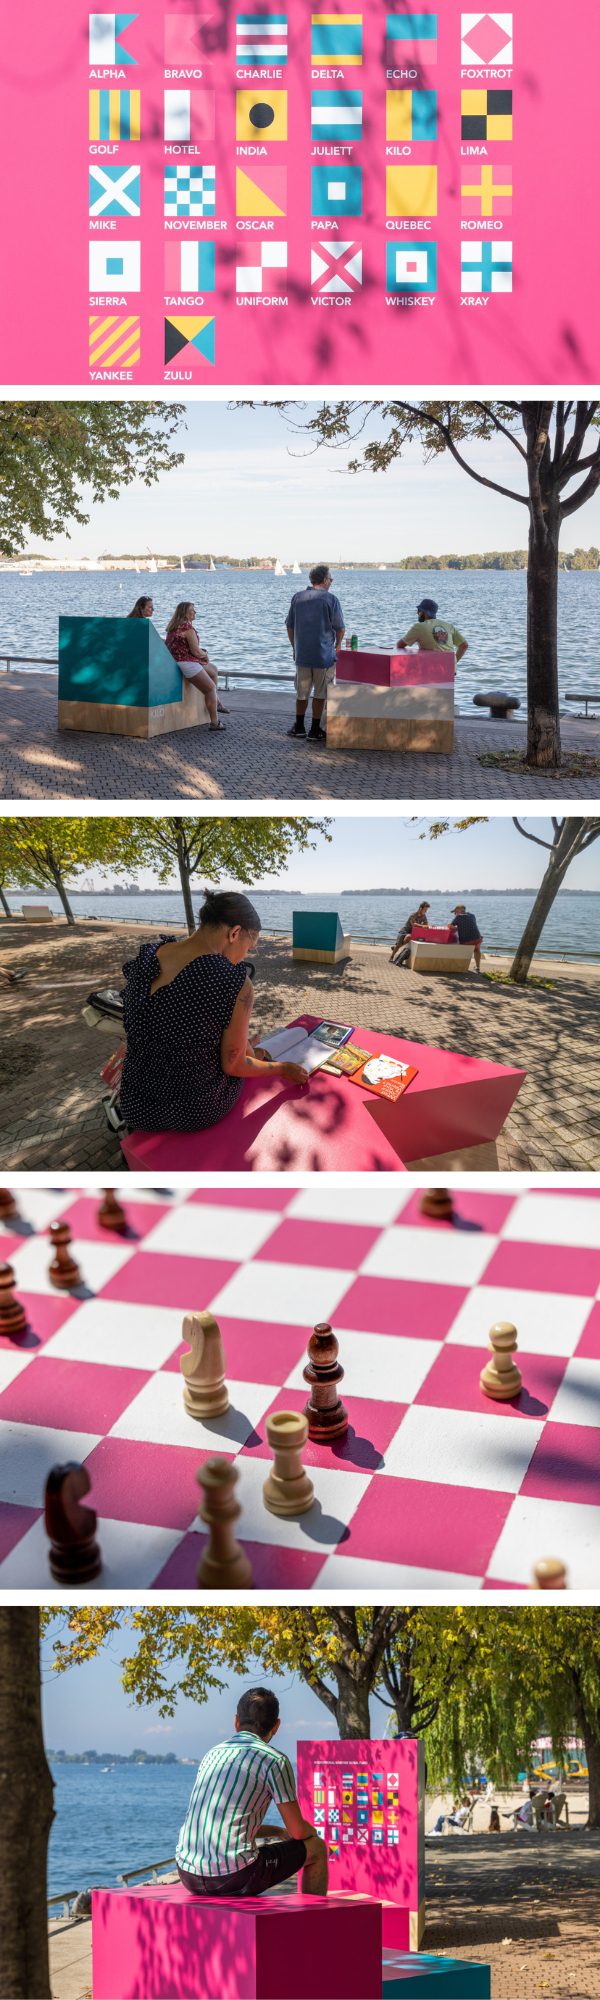 Revitalizing Toronto’s Waterfront Through Creative Placemaking | MASSIVart - Creative Consulting